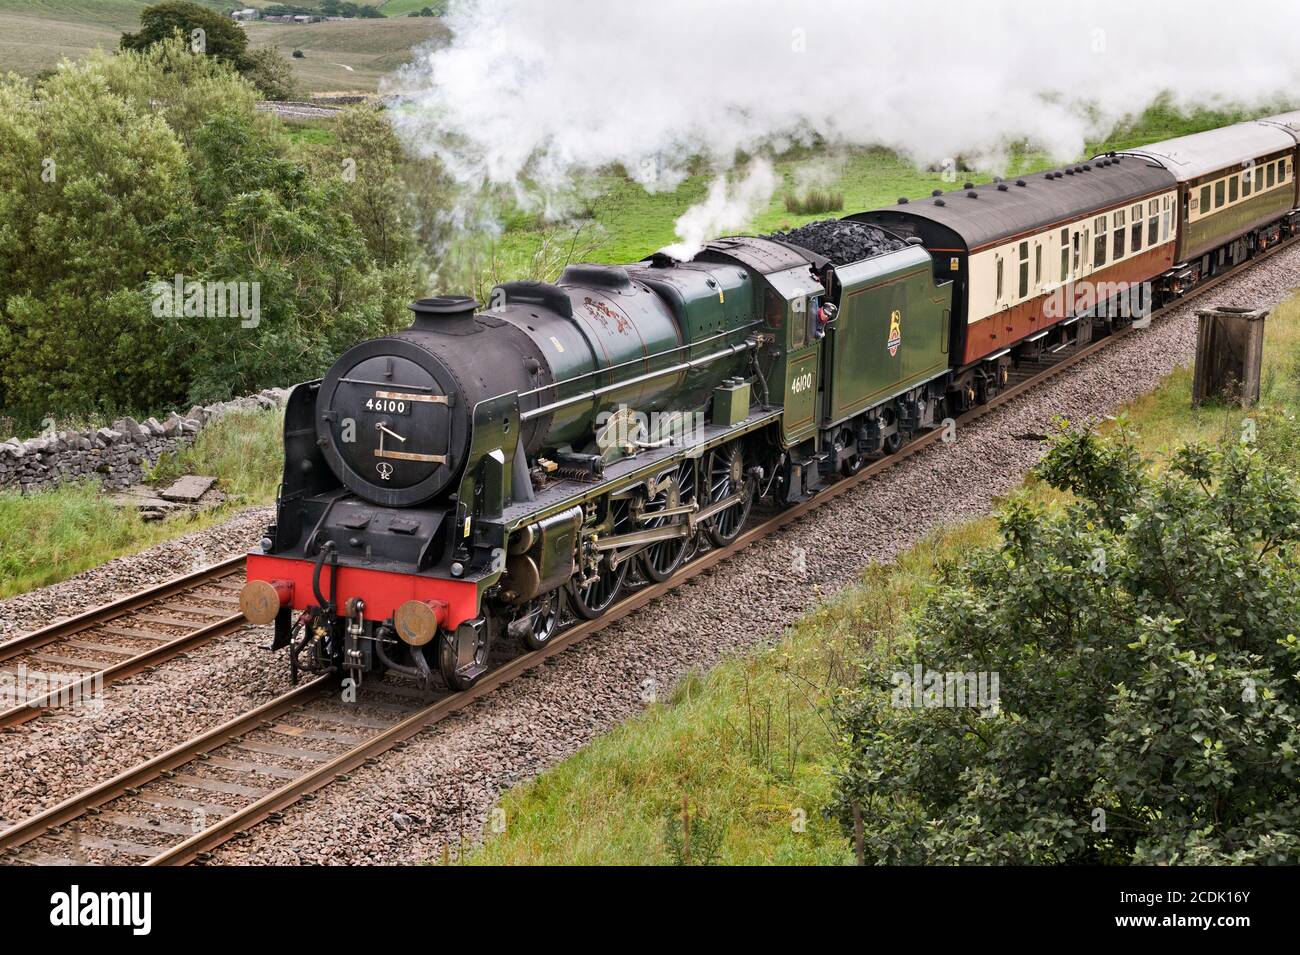 The 'Royal Scot' steam locomotive hauls 'The Fellsman' train on the Settle-Carlisle railway line near Ribblehead in The Yorkshire Dales National Park. Stock Photo